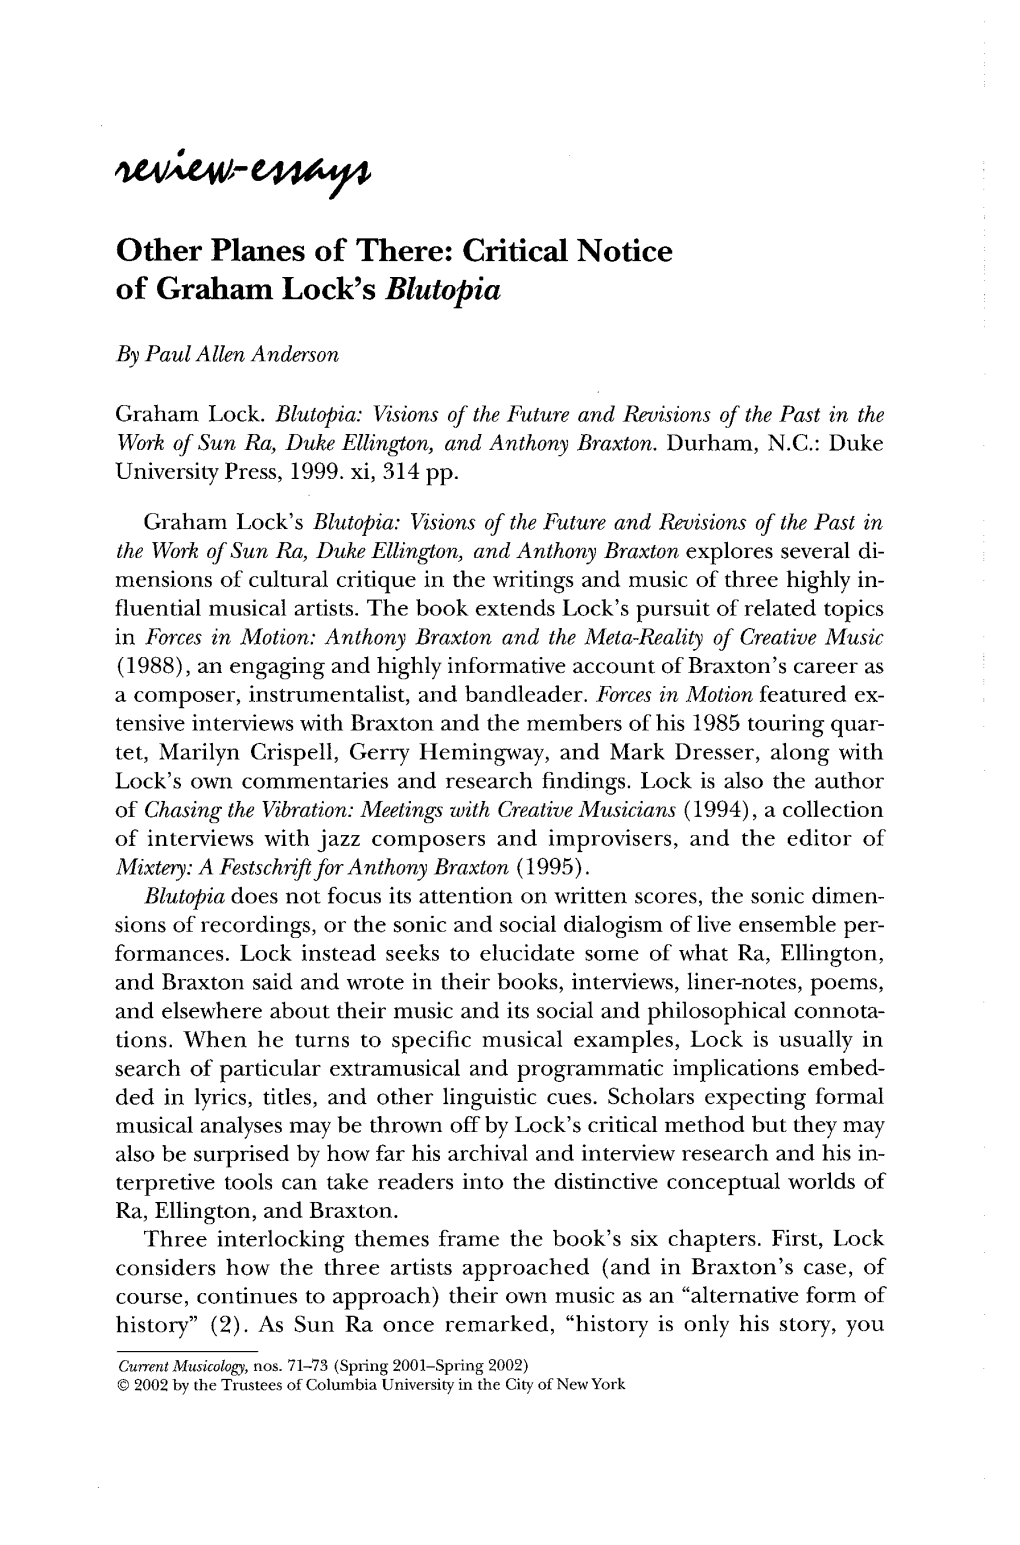 Critical Notice of Graham Lock's Blutopia